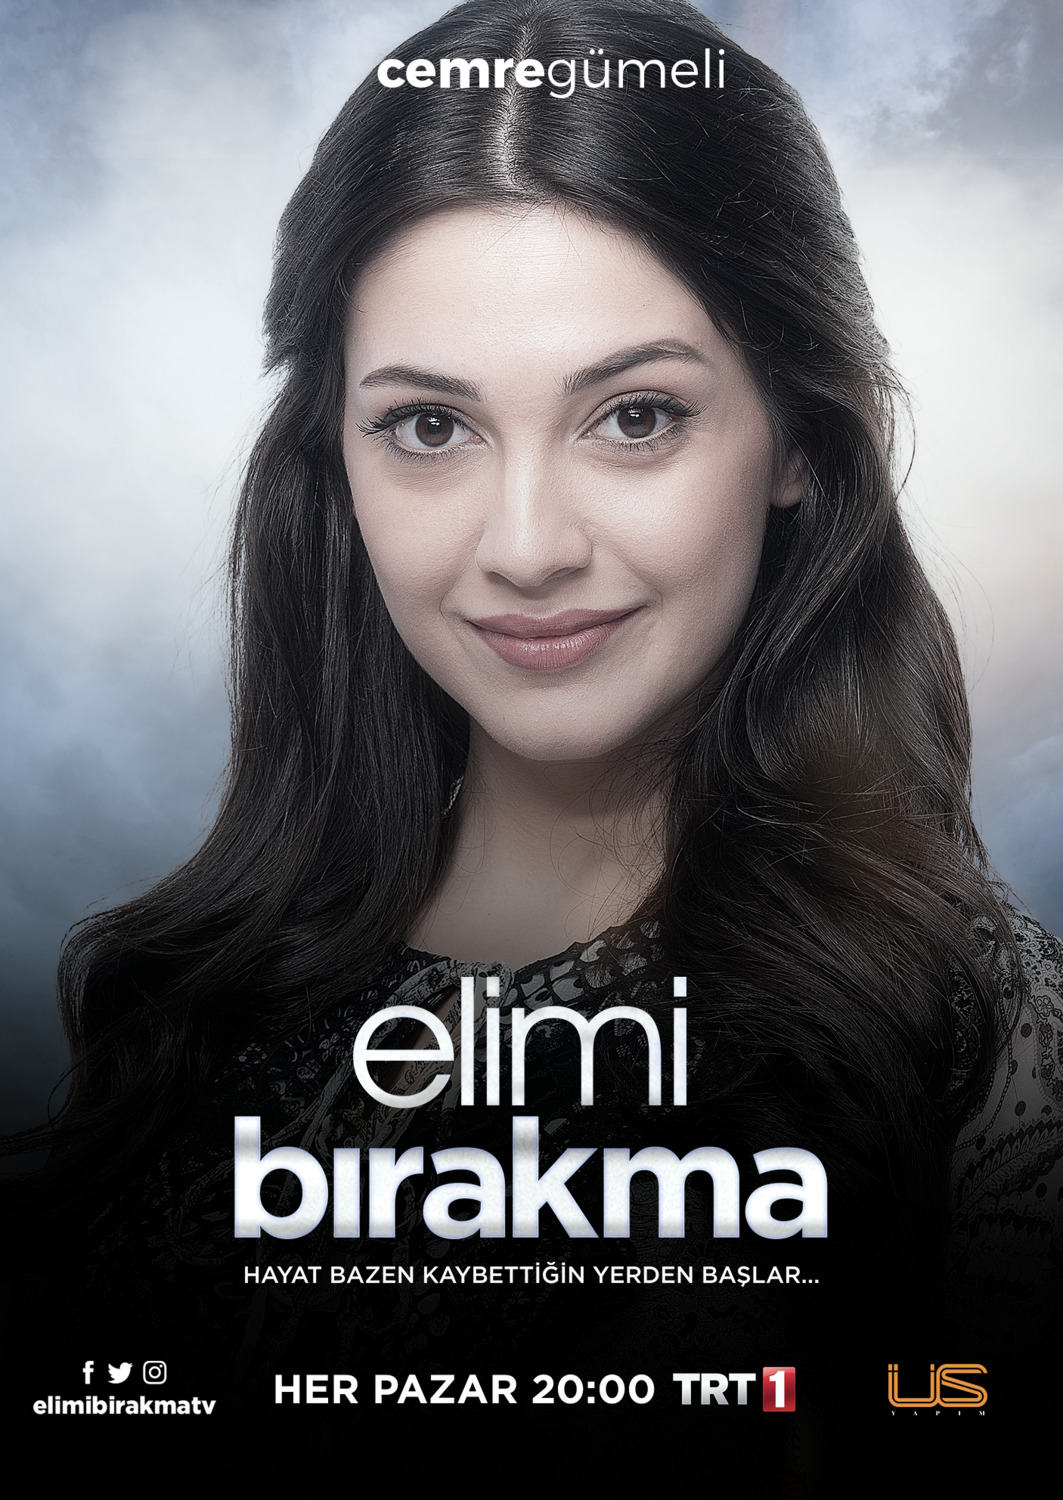 Extra Large TV Poster Image for Elimi birakma (#17 of 20)